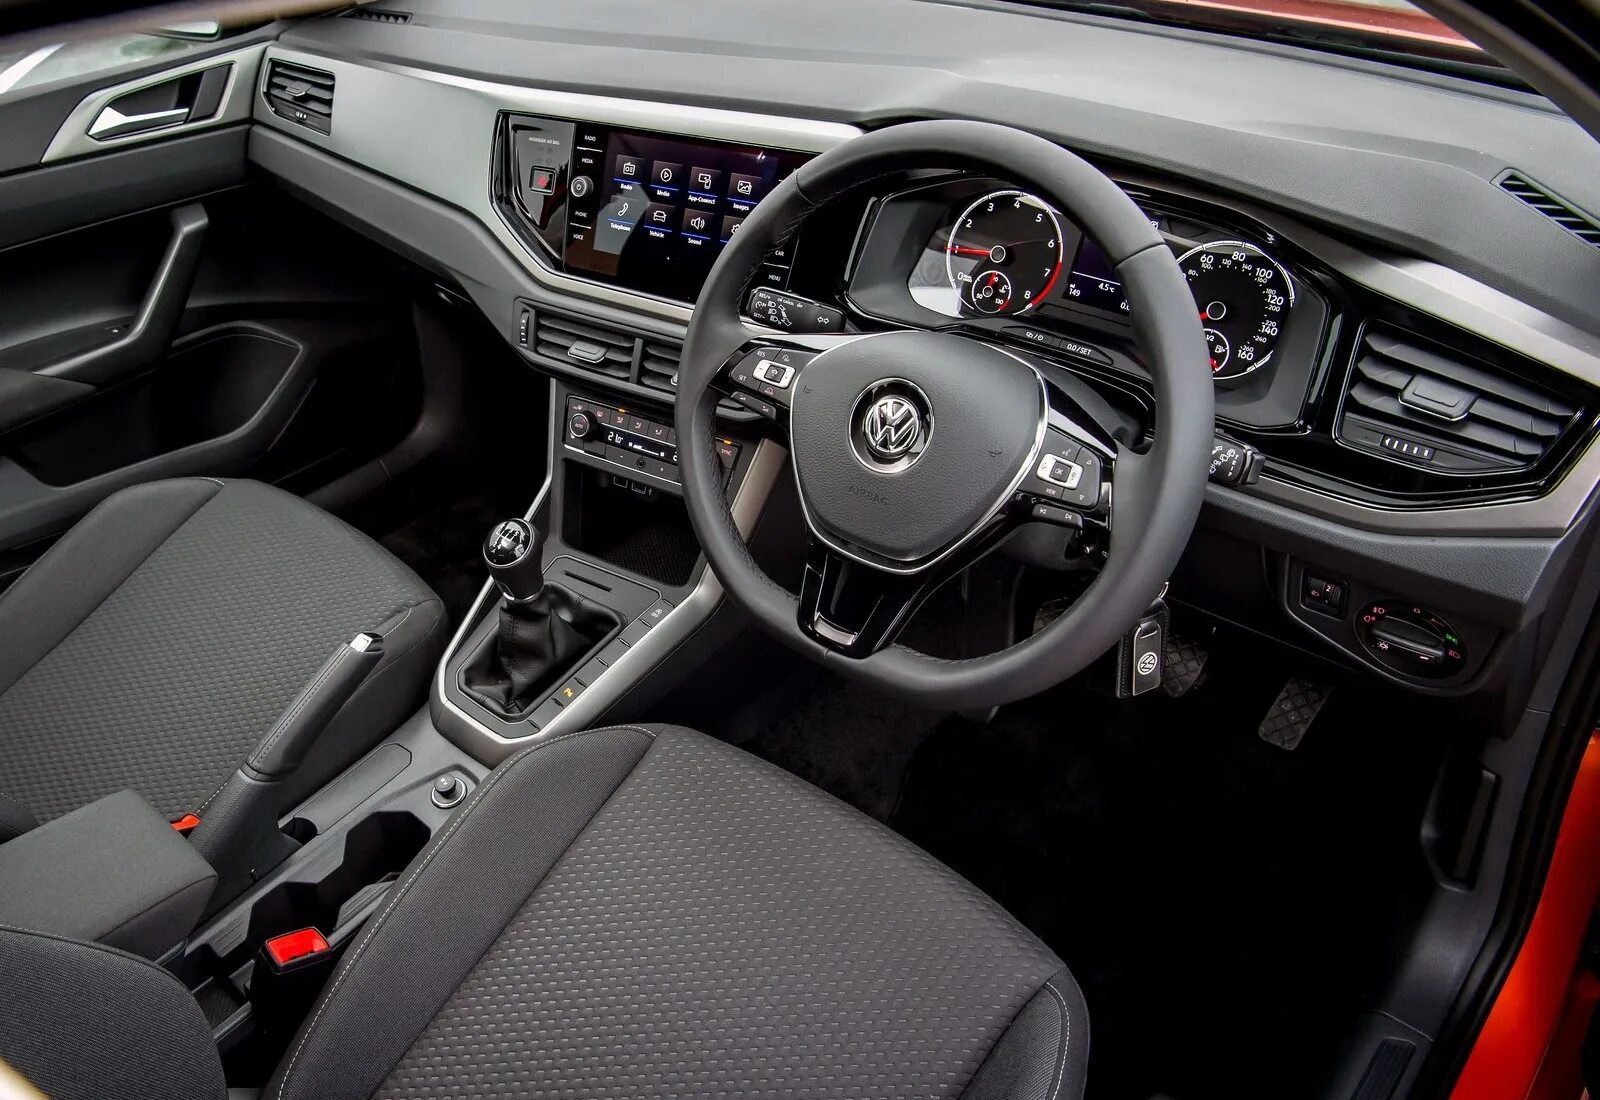 Поло интерьер. VW Polo 2020 Interior. Volkswagen Polo 2021 интерьер. Volkswagen Polo 2020 интерьер. Фольксваген поло 2022 интерьер.